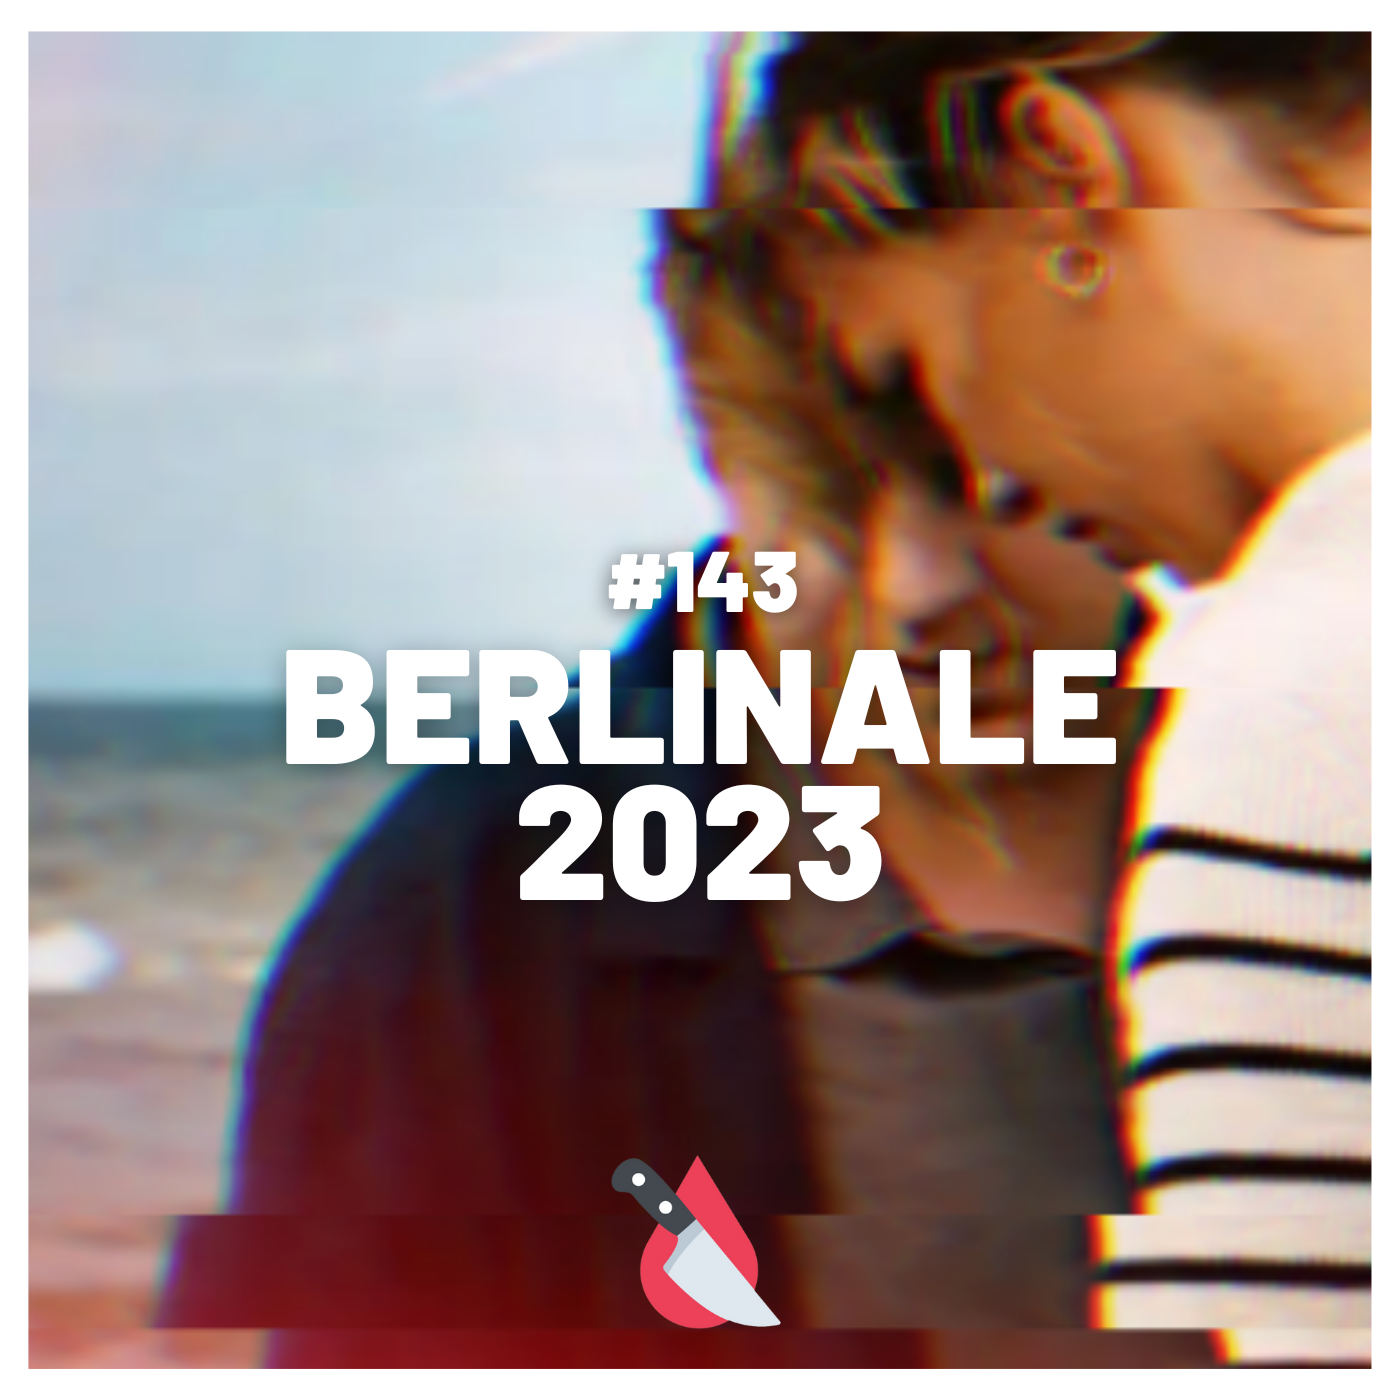 #143 - Berlinale 2023